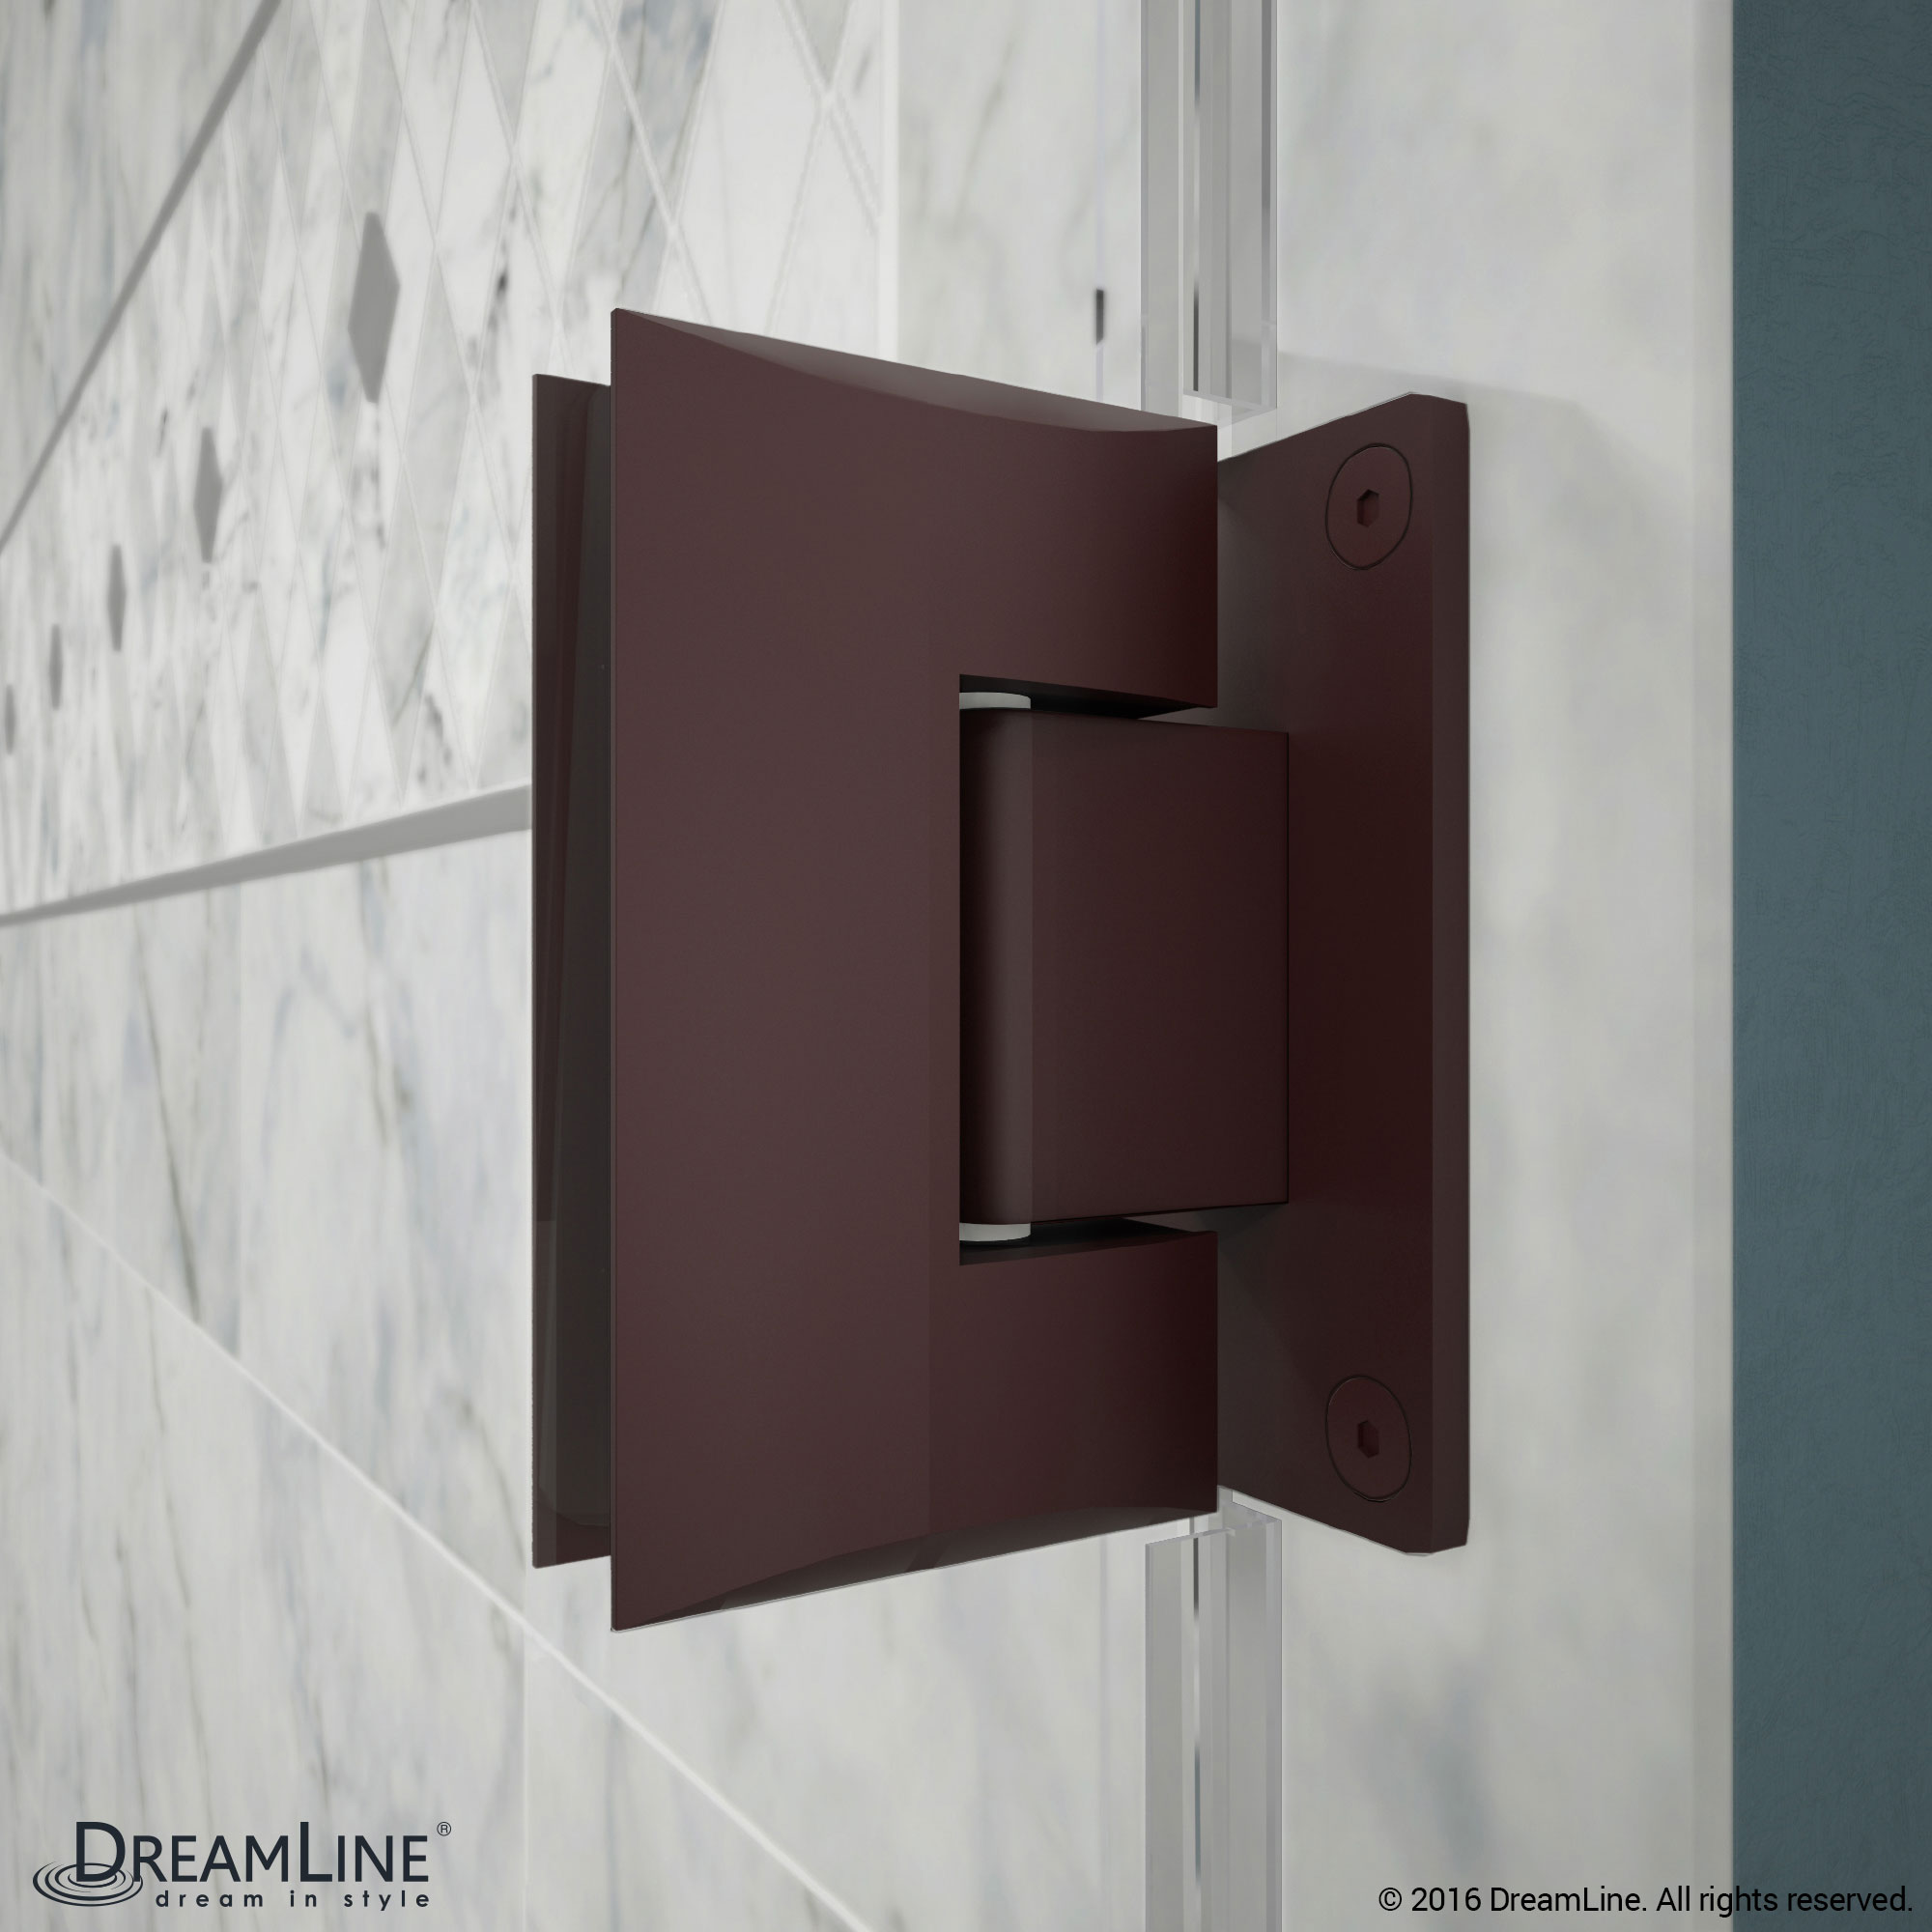 DreamLine SHDR-23537210-06 Oil Rubbed Bronze Radiance 53" Frameless Hinged Clear Shower Door